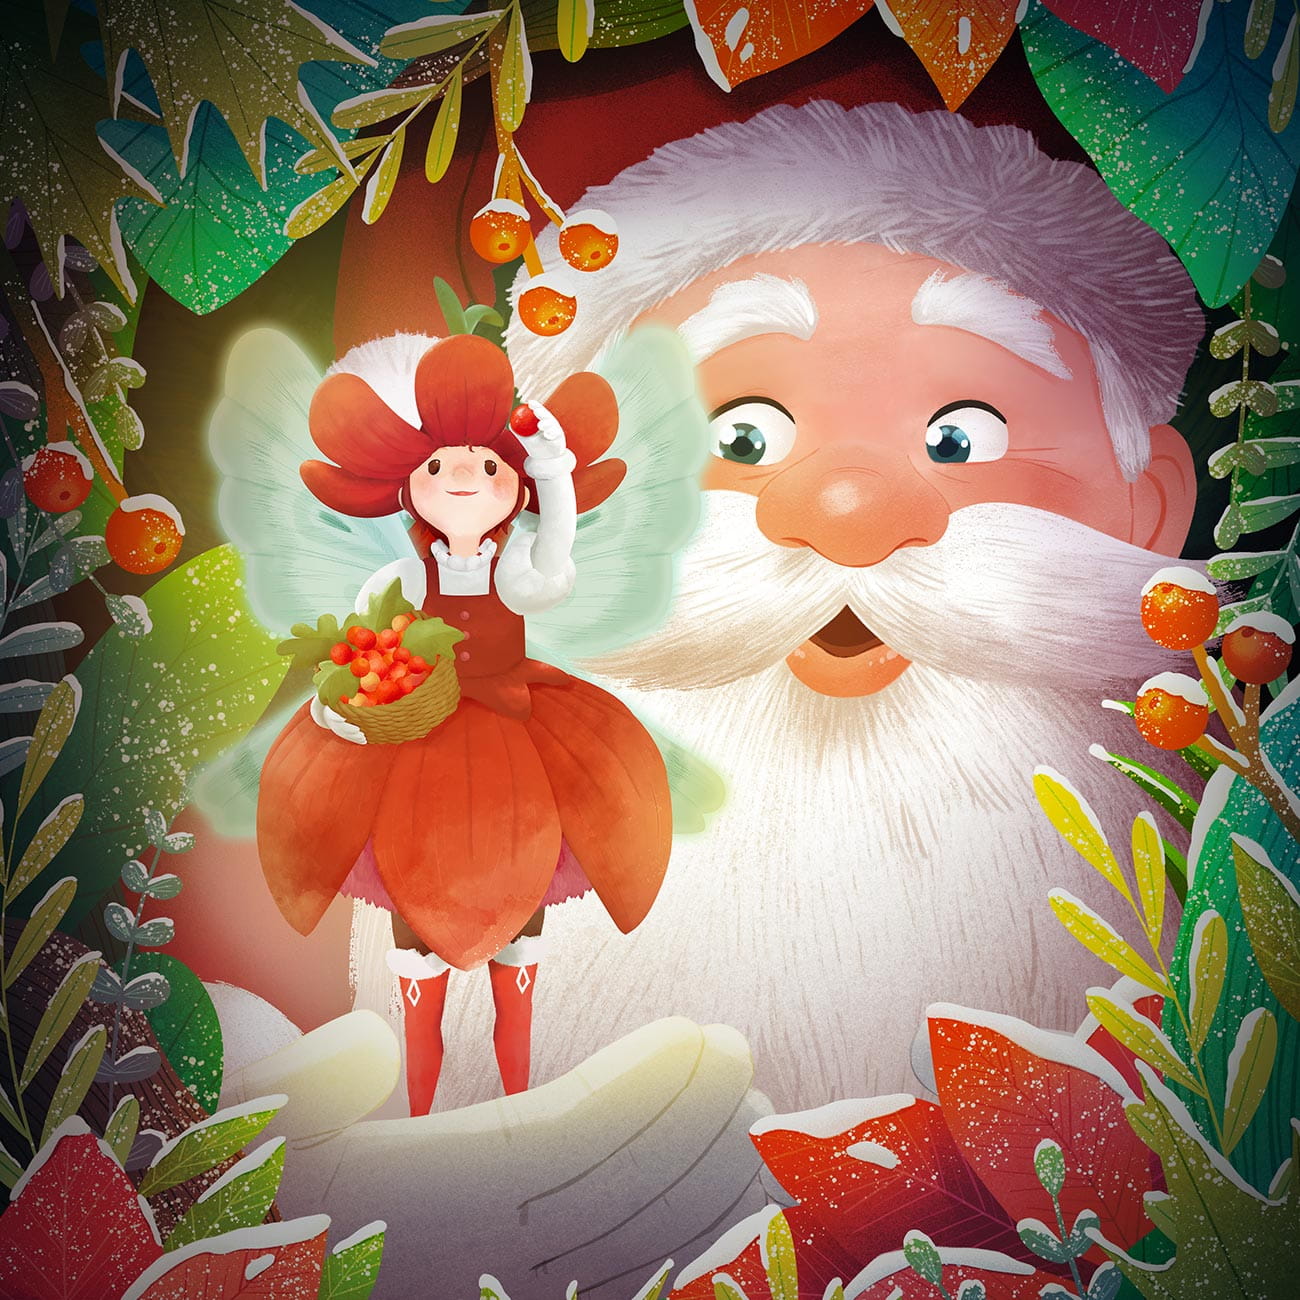 Pacific Place Christmas characters by illustrator Kim Minji